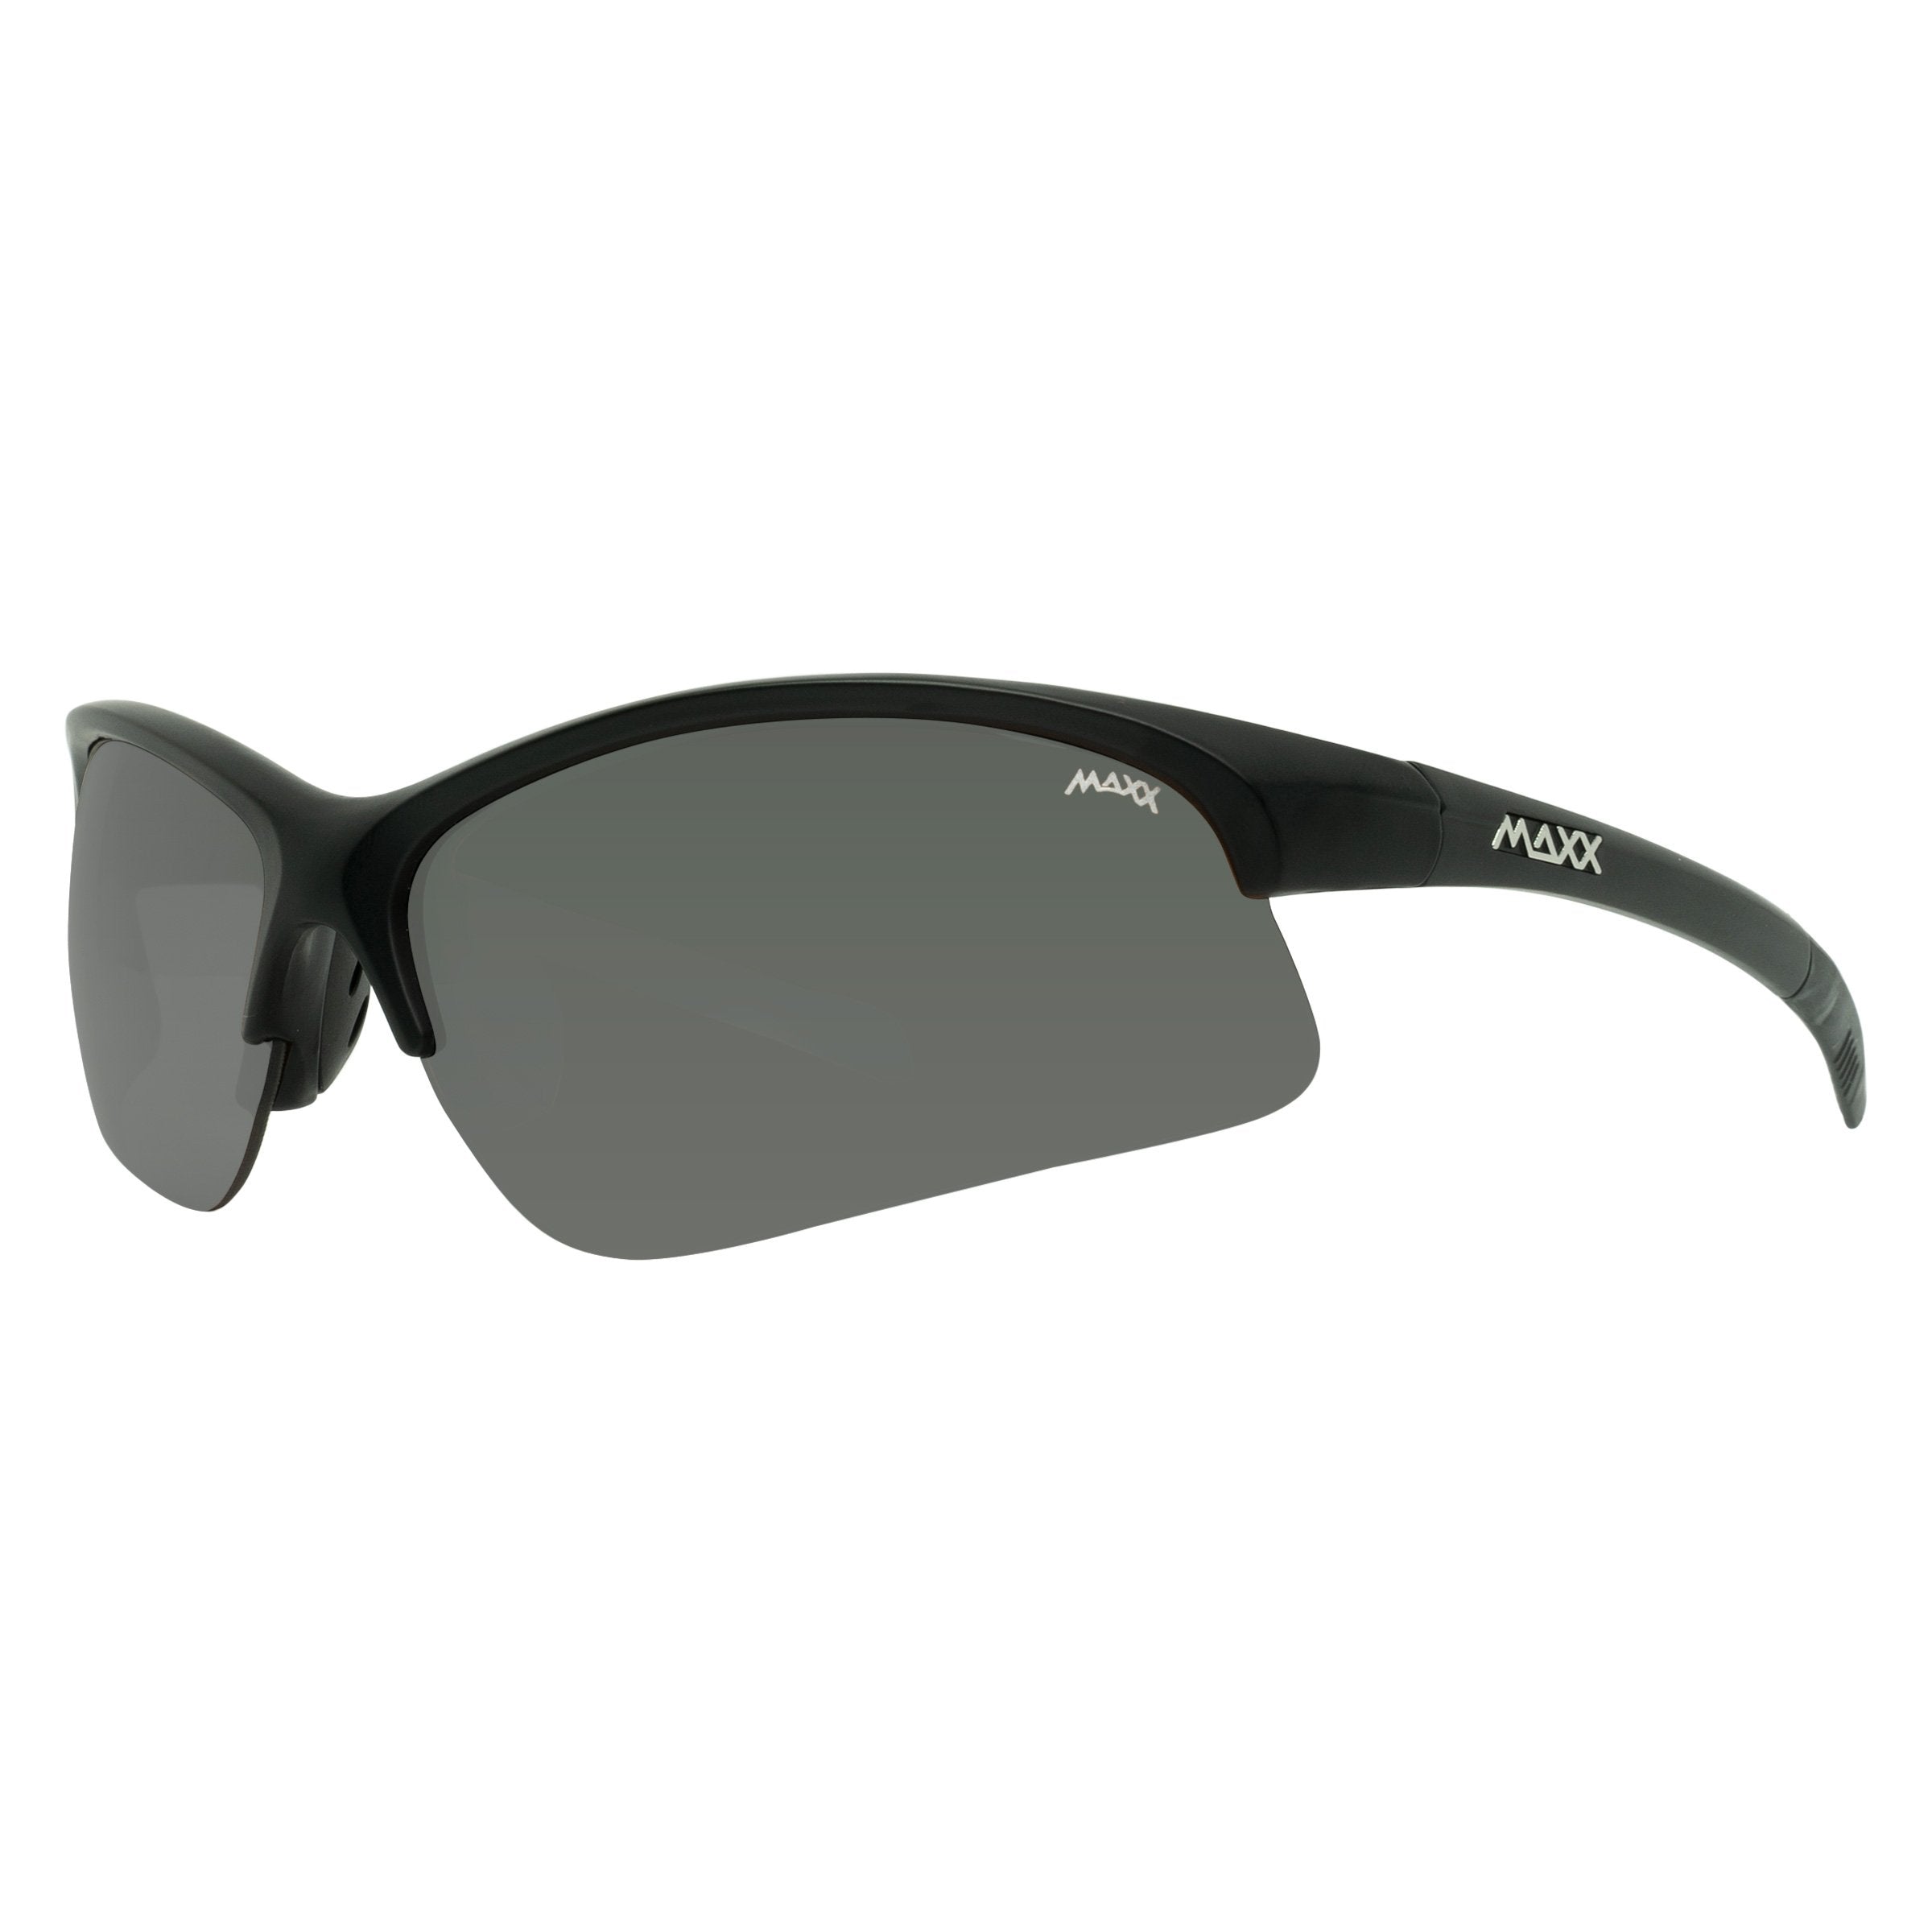 Mirrored Smoke Polarized Sunglasses - Black Full Frame Retro 2.0